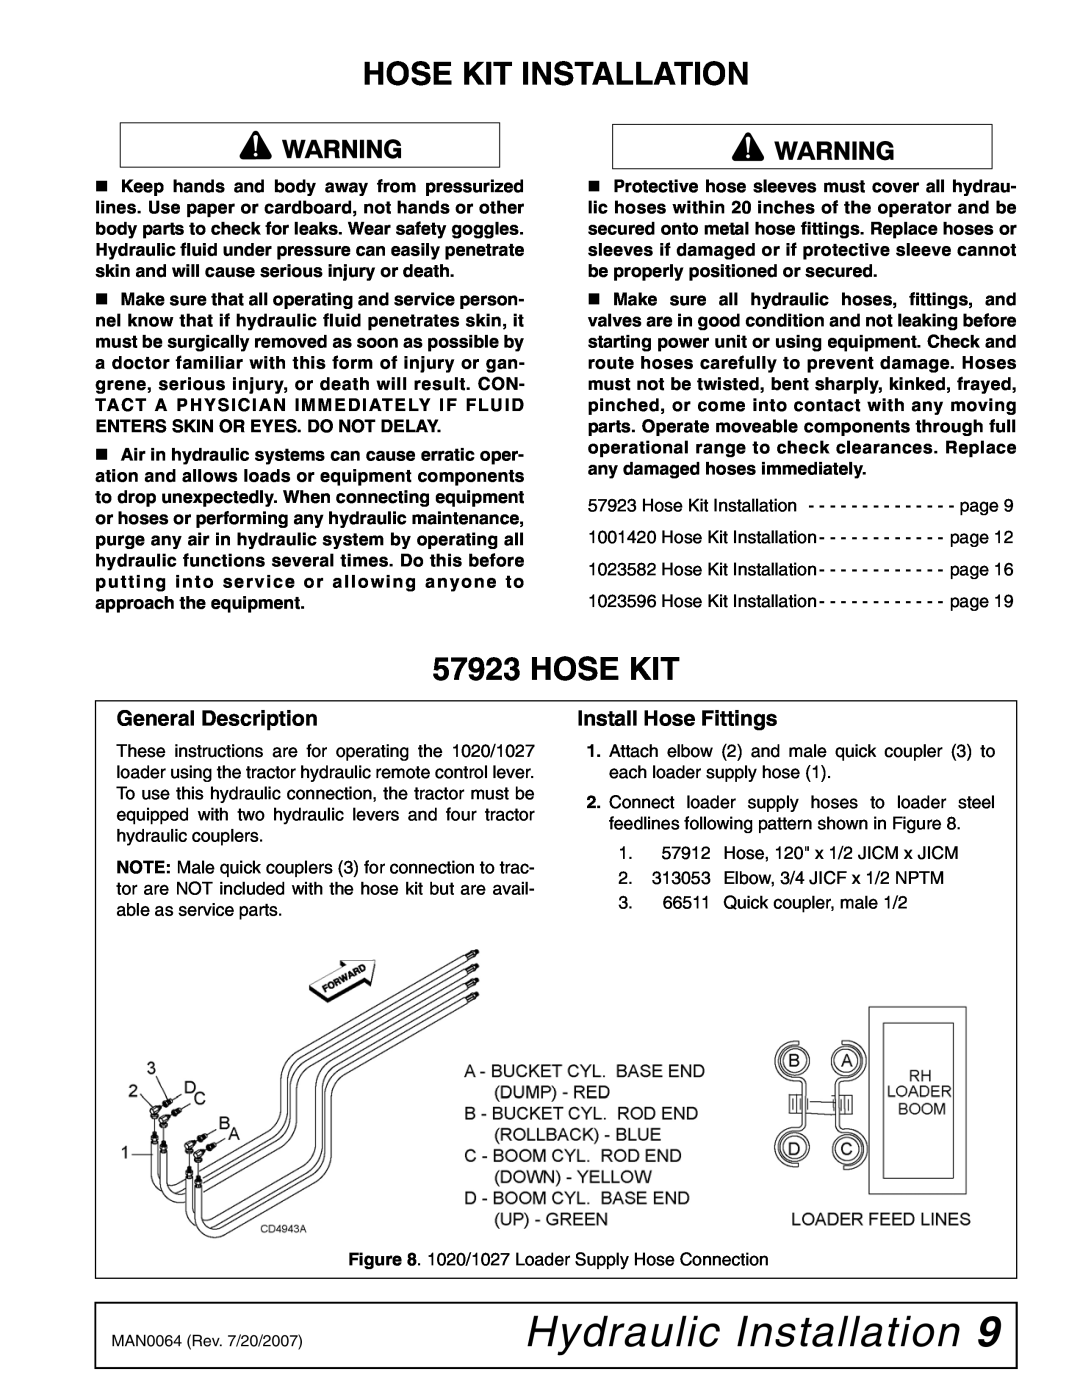 Woods Equipment 111877 manual Hydraulic Installation, Hose Kit Installation, General Description, Install Hose Fittings 